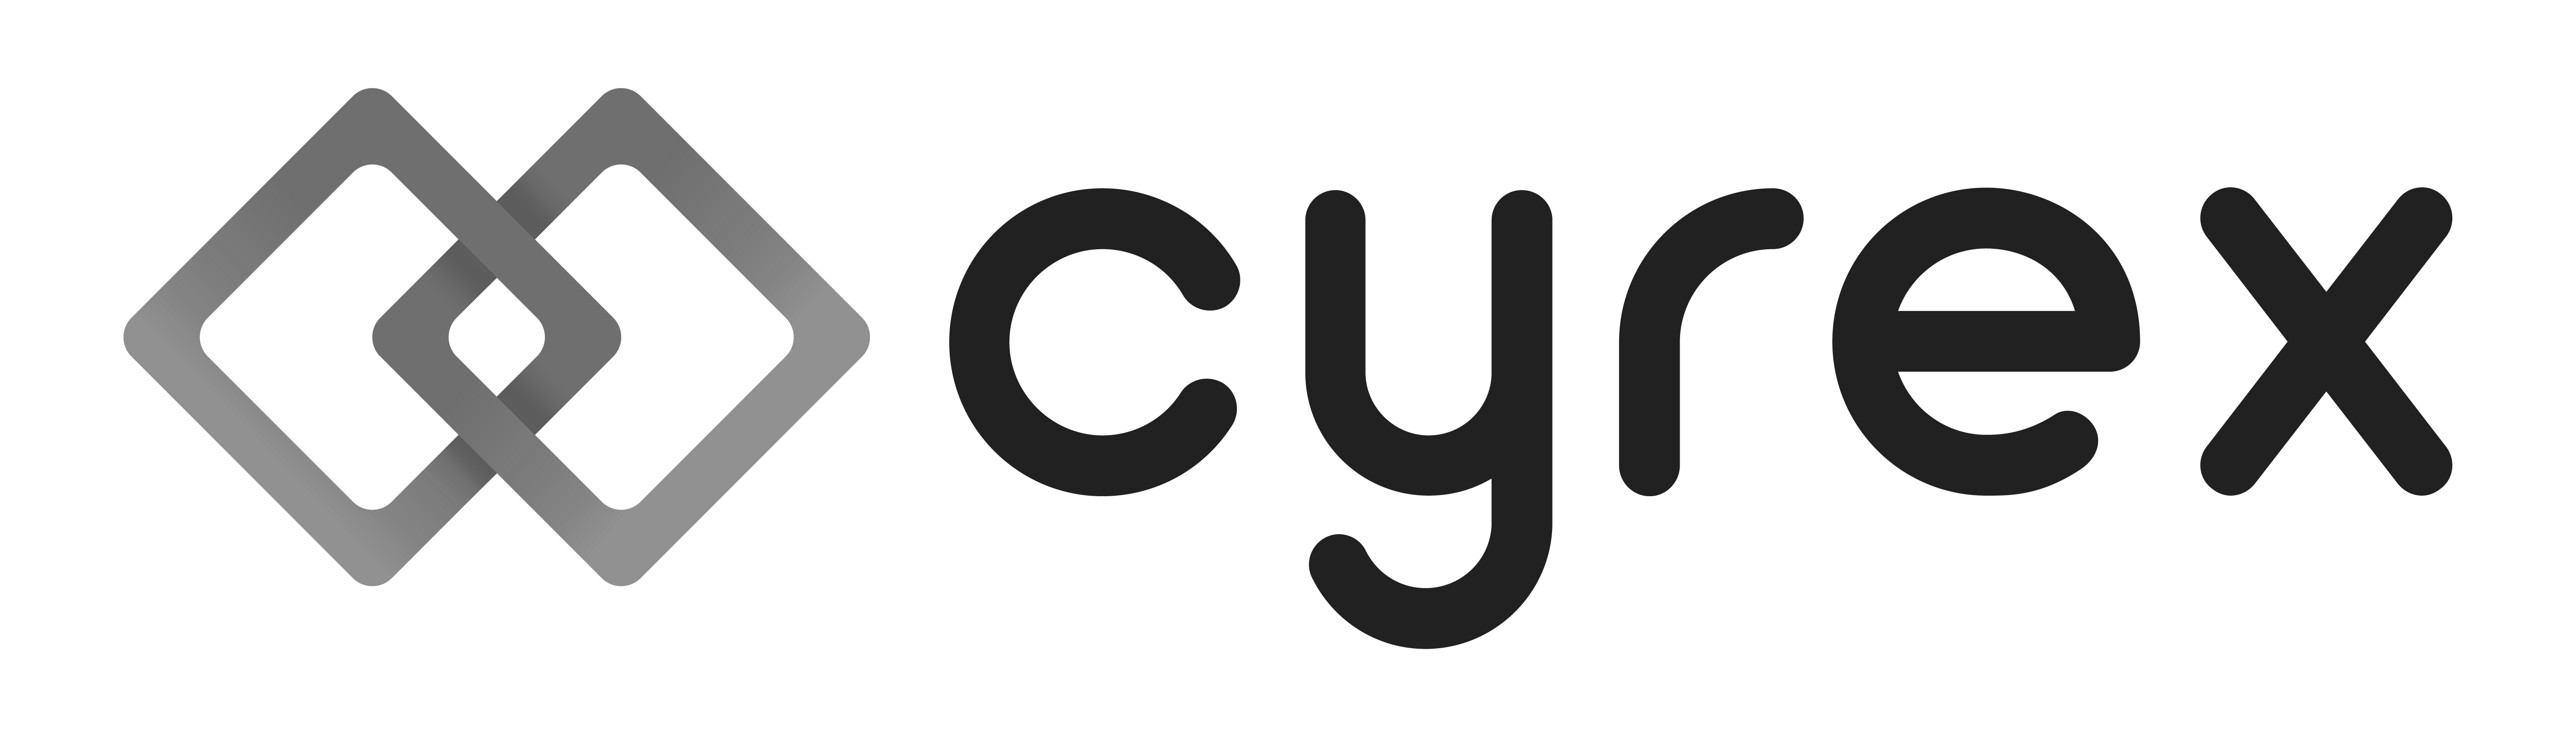 Logo Cyrex